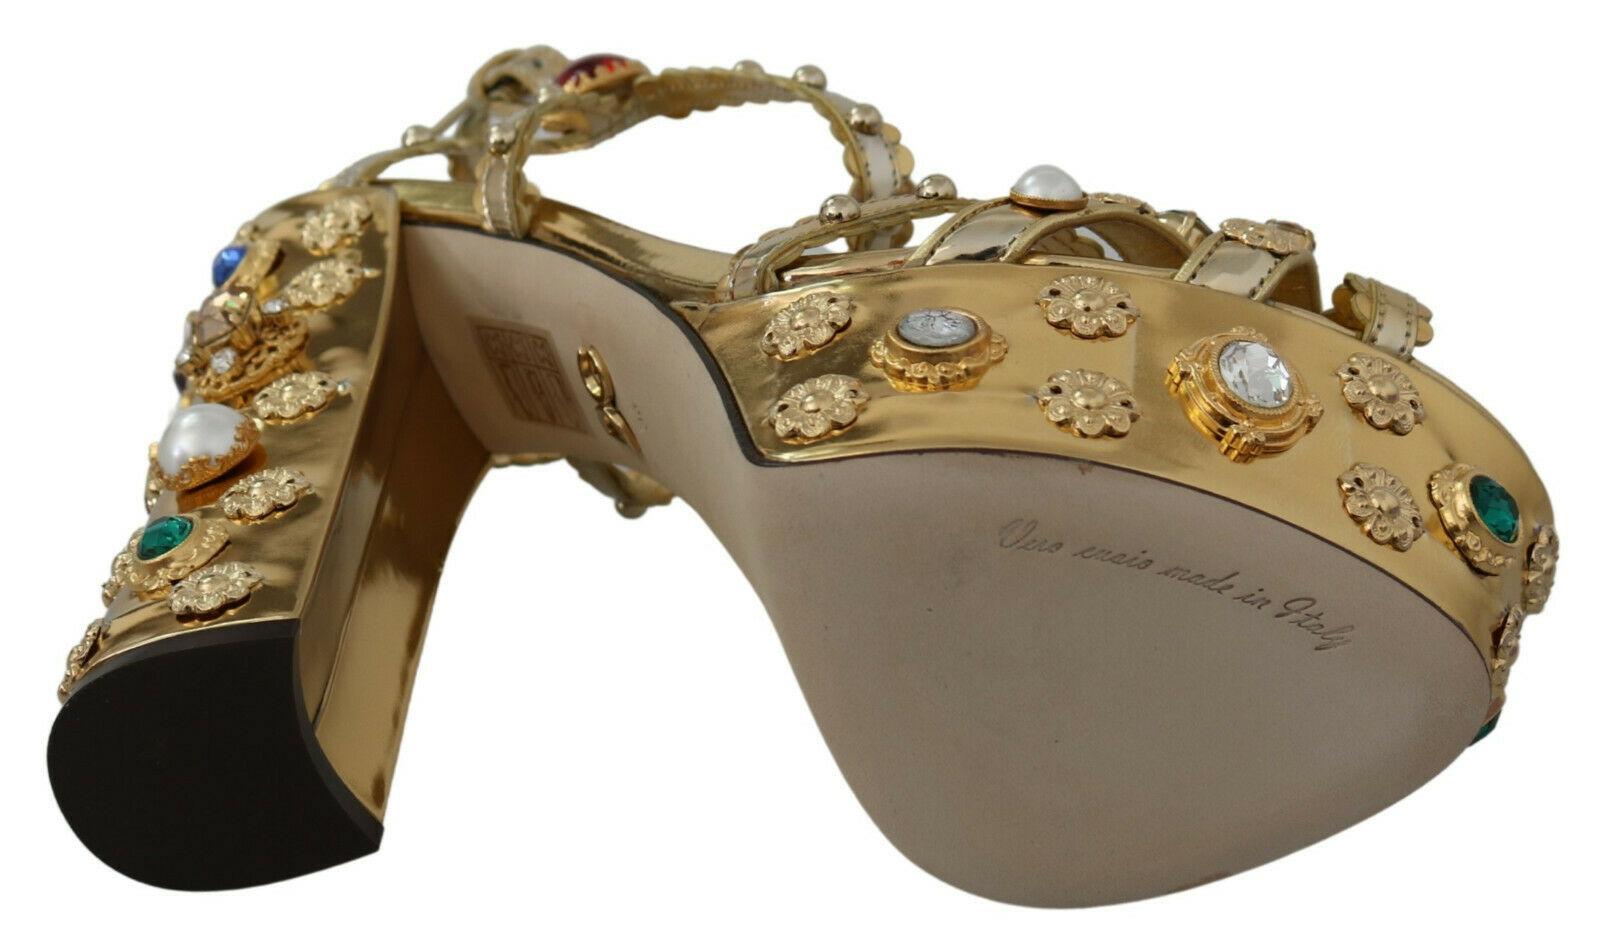 Brown Dolce & Gabbana Gold Leather Ankle Strap Sandals Multicolor Crystal Heels Pumps